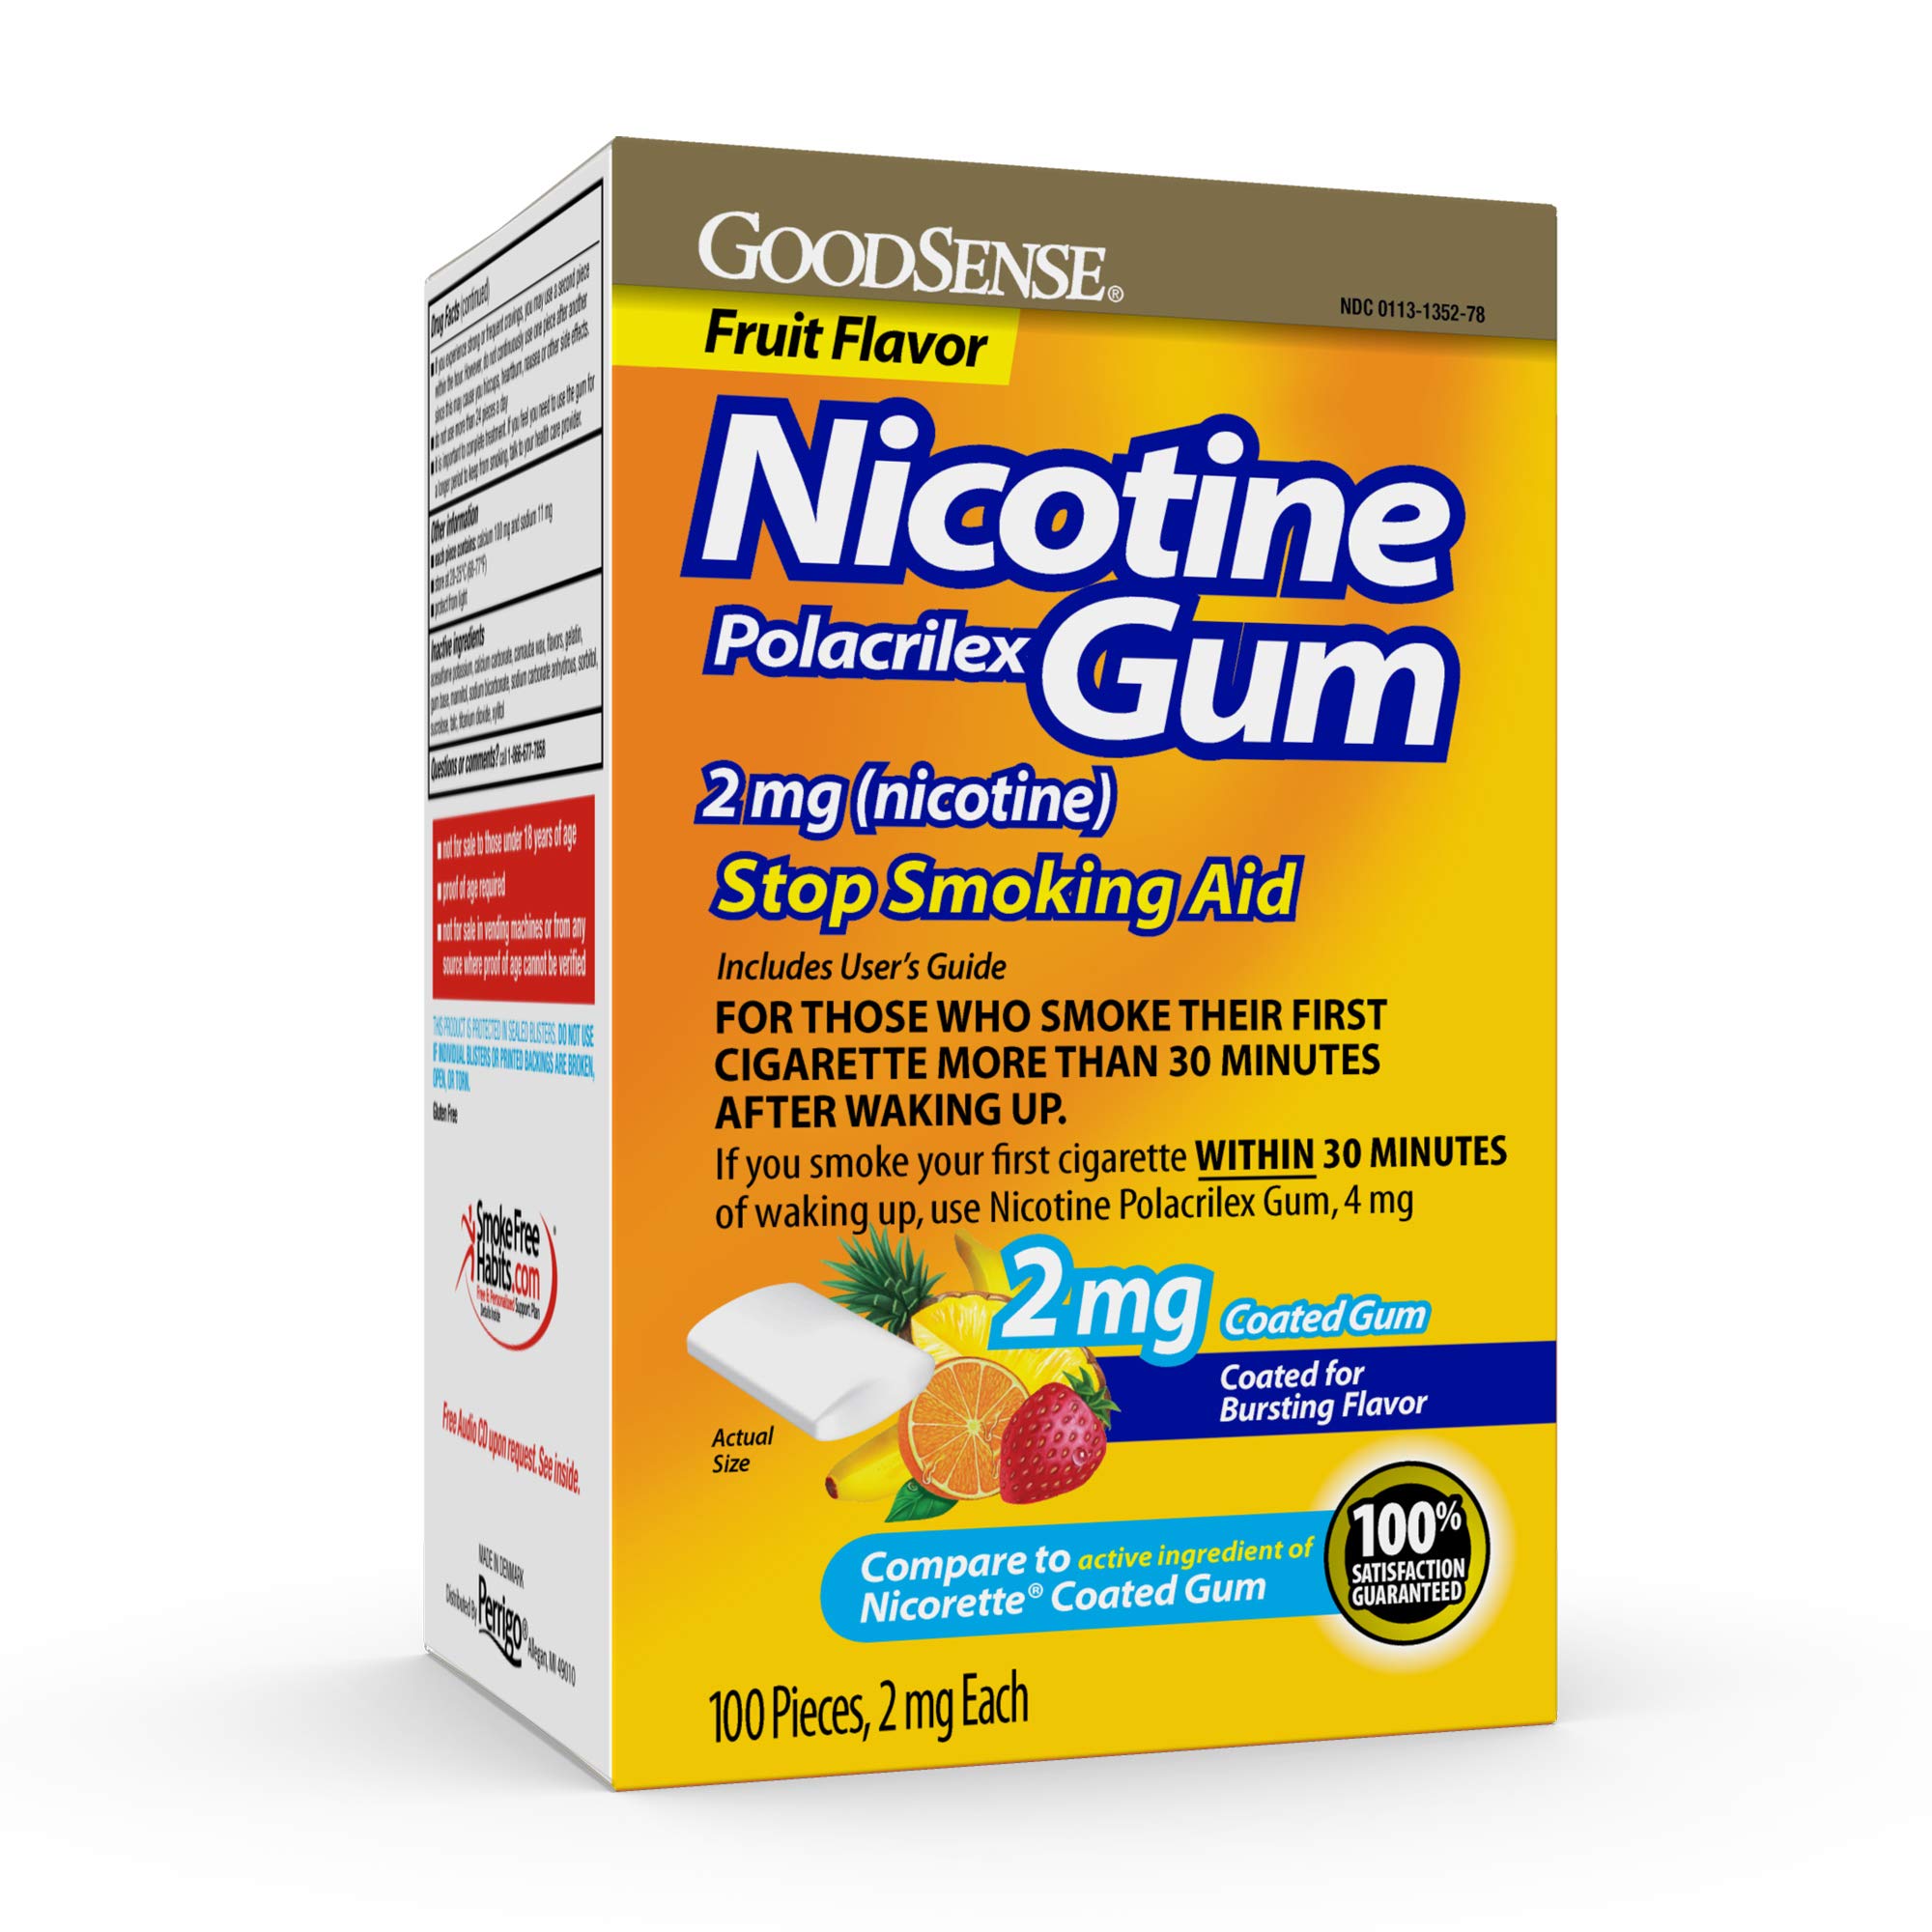 GoodSense Nicotine Polacrilex Coated Gum 2 mg (nicotine), Fruit Flavor, Stop Smoking Aid; quit smoking with nicotine gum, 100 Co